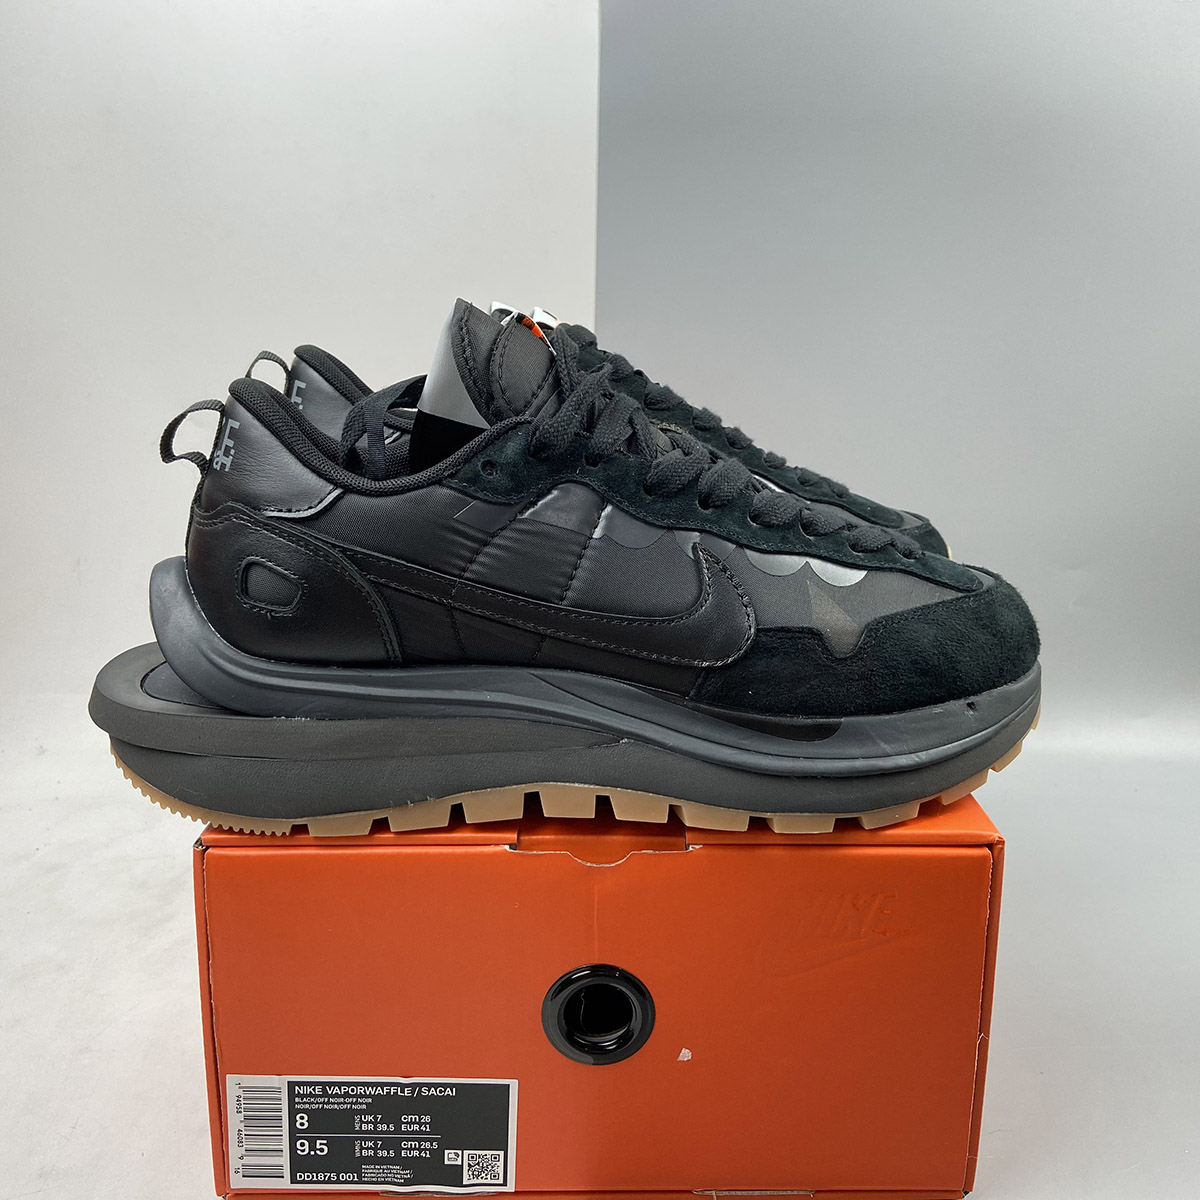 sacai x Nike Vaporwaffle Black/Off-Noir DD1875-001 For Sale – The Sole Line